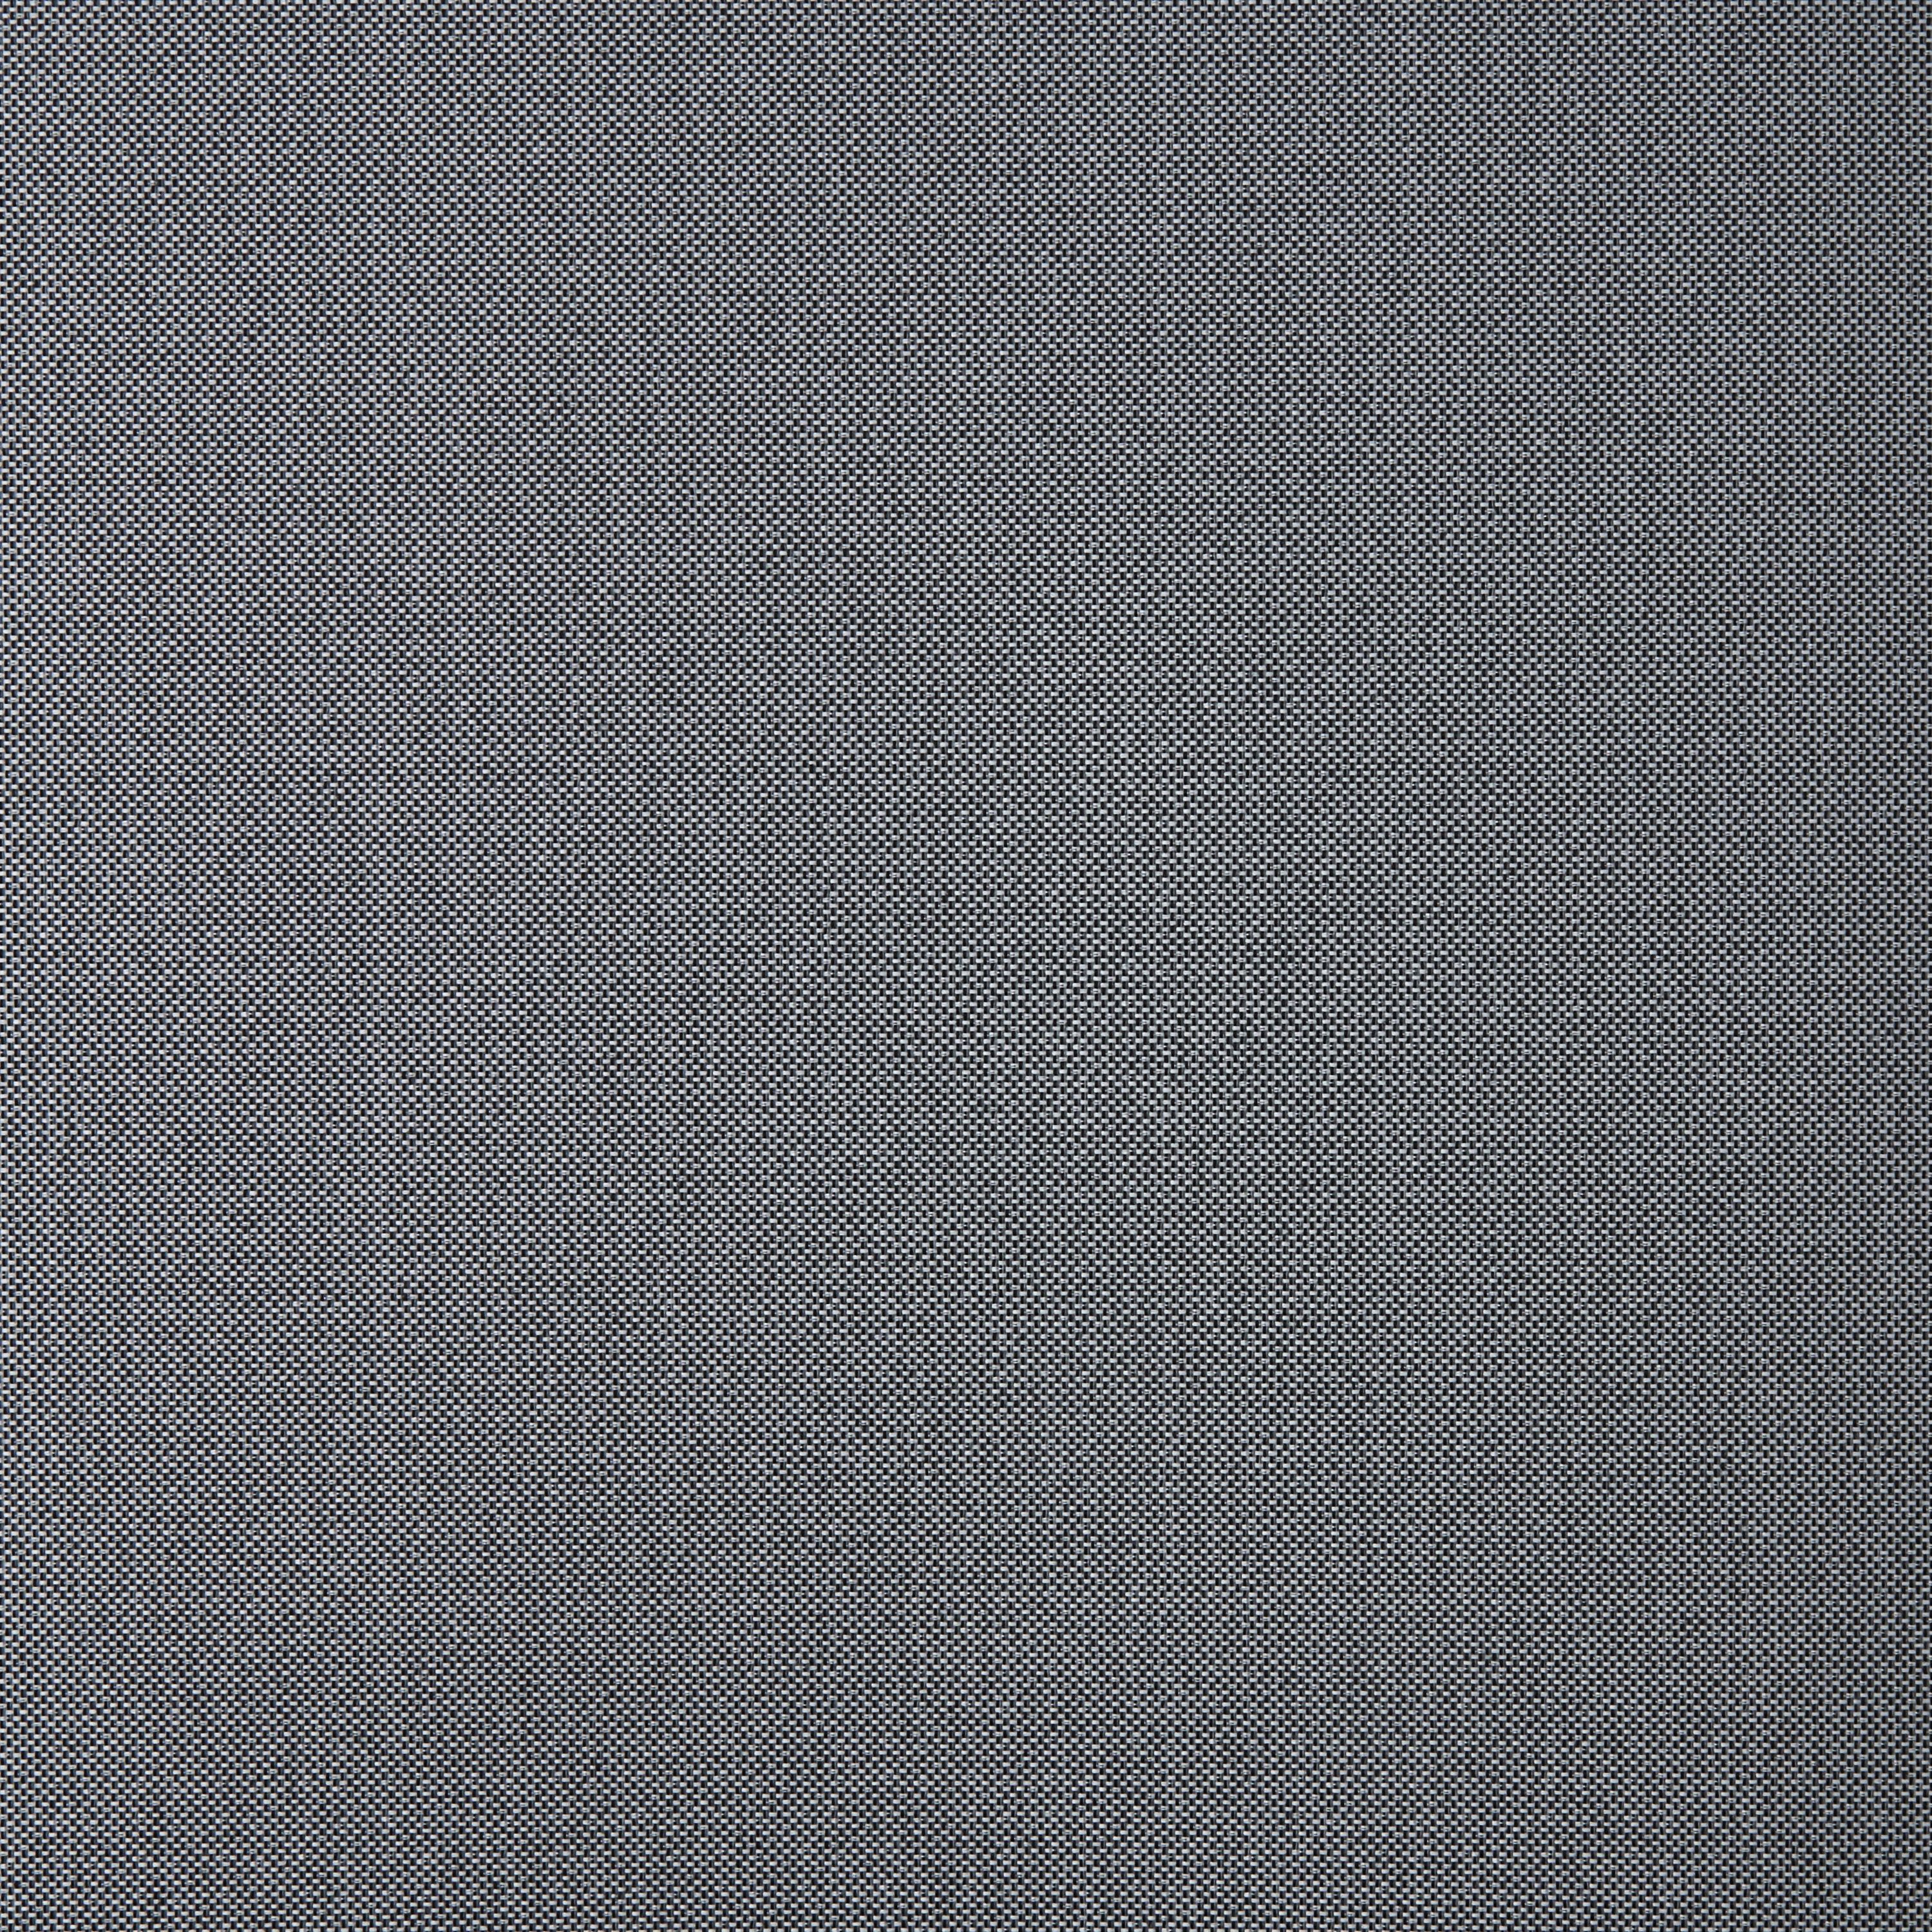 Iggy Corded Grey Plain Daylight Roller Blind (W)160cm (L)180cm